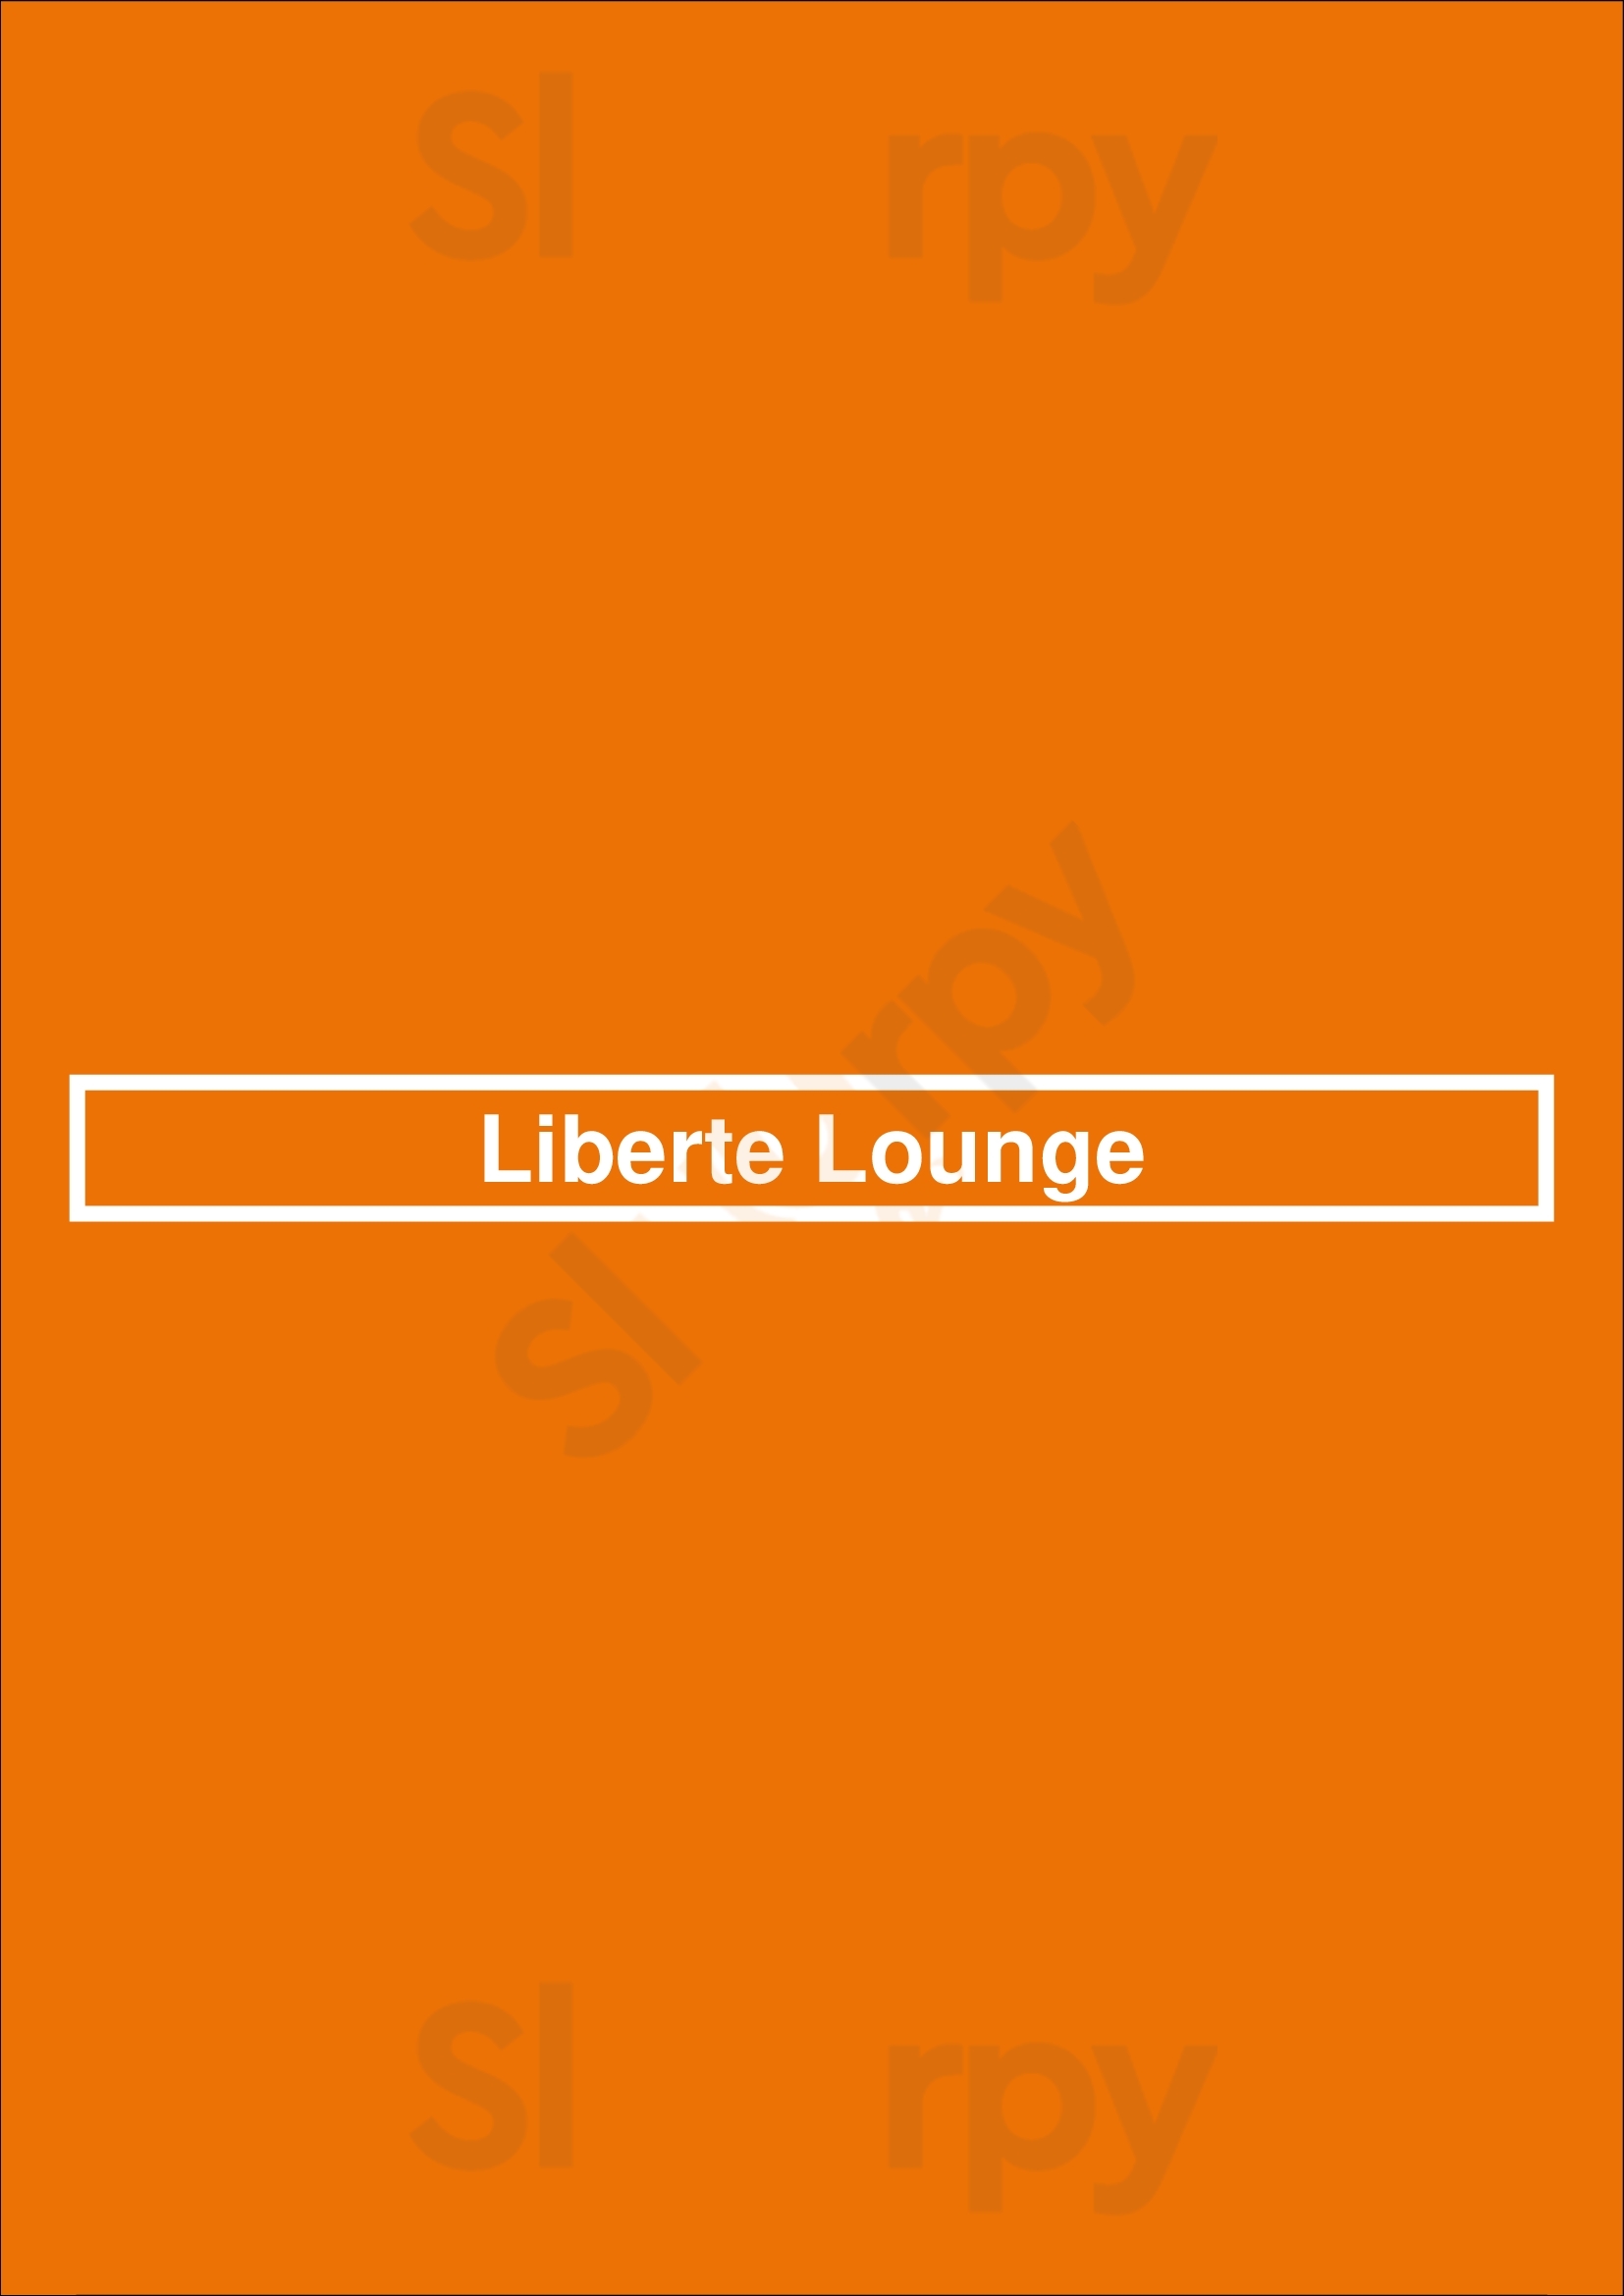 Liberte Lounge Philadelphia Menu - 1